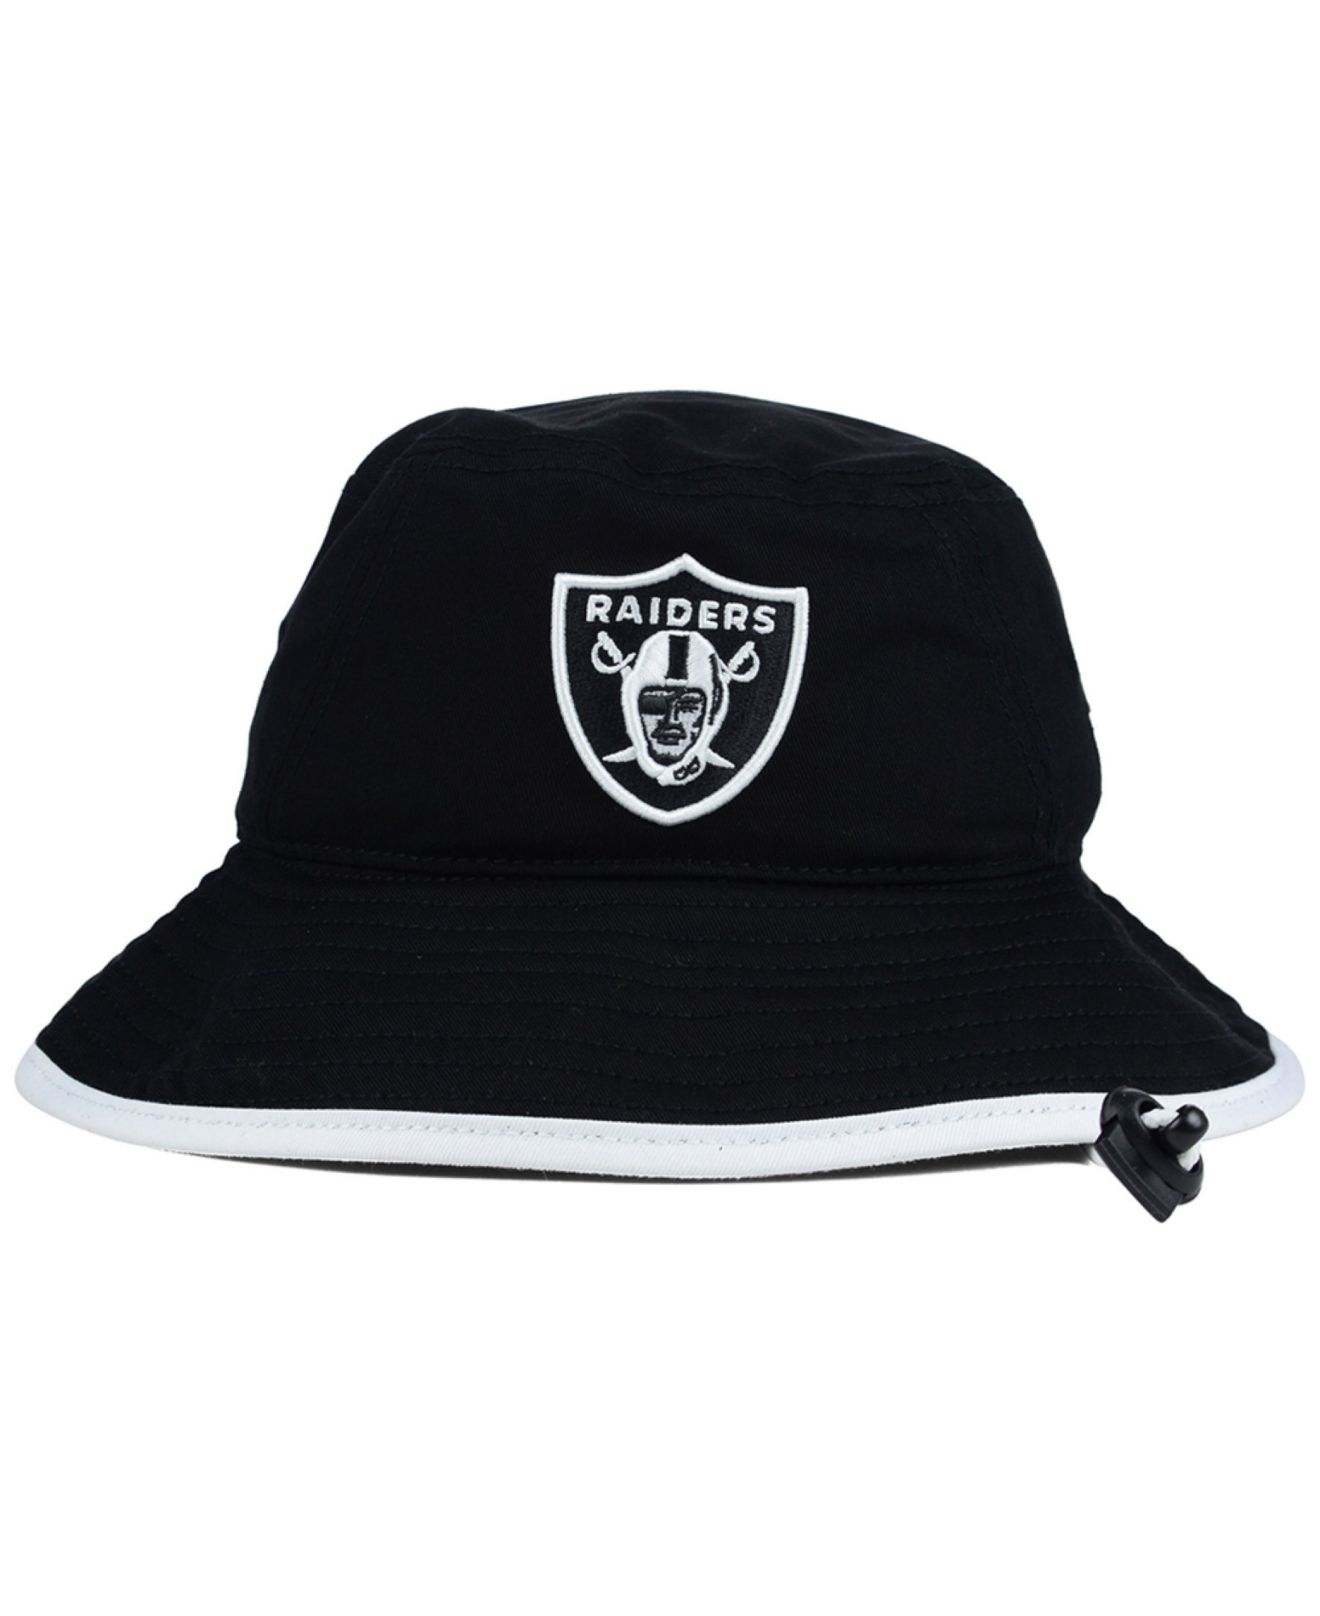 Lyst Ktz Oakland Raiders Nfl Black White Bucket Hat in Black